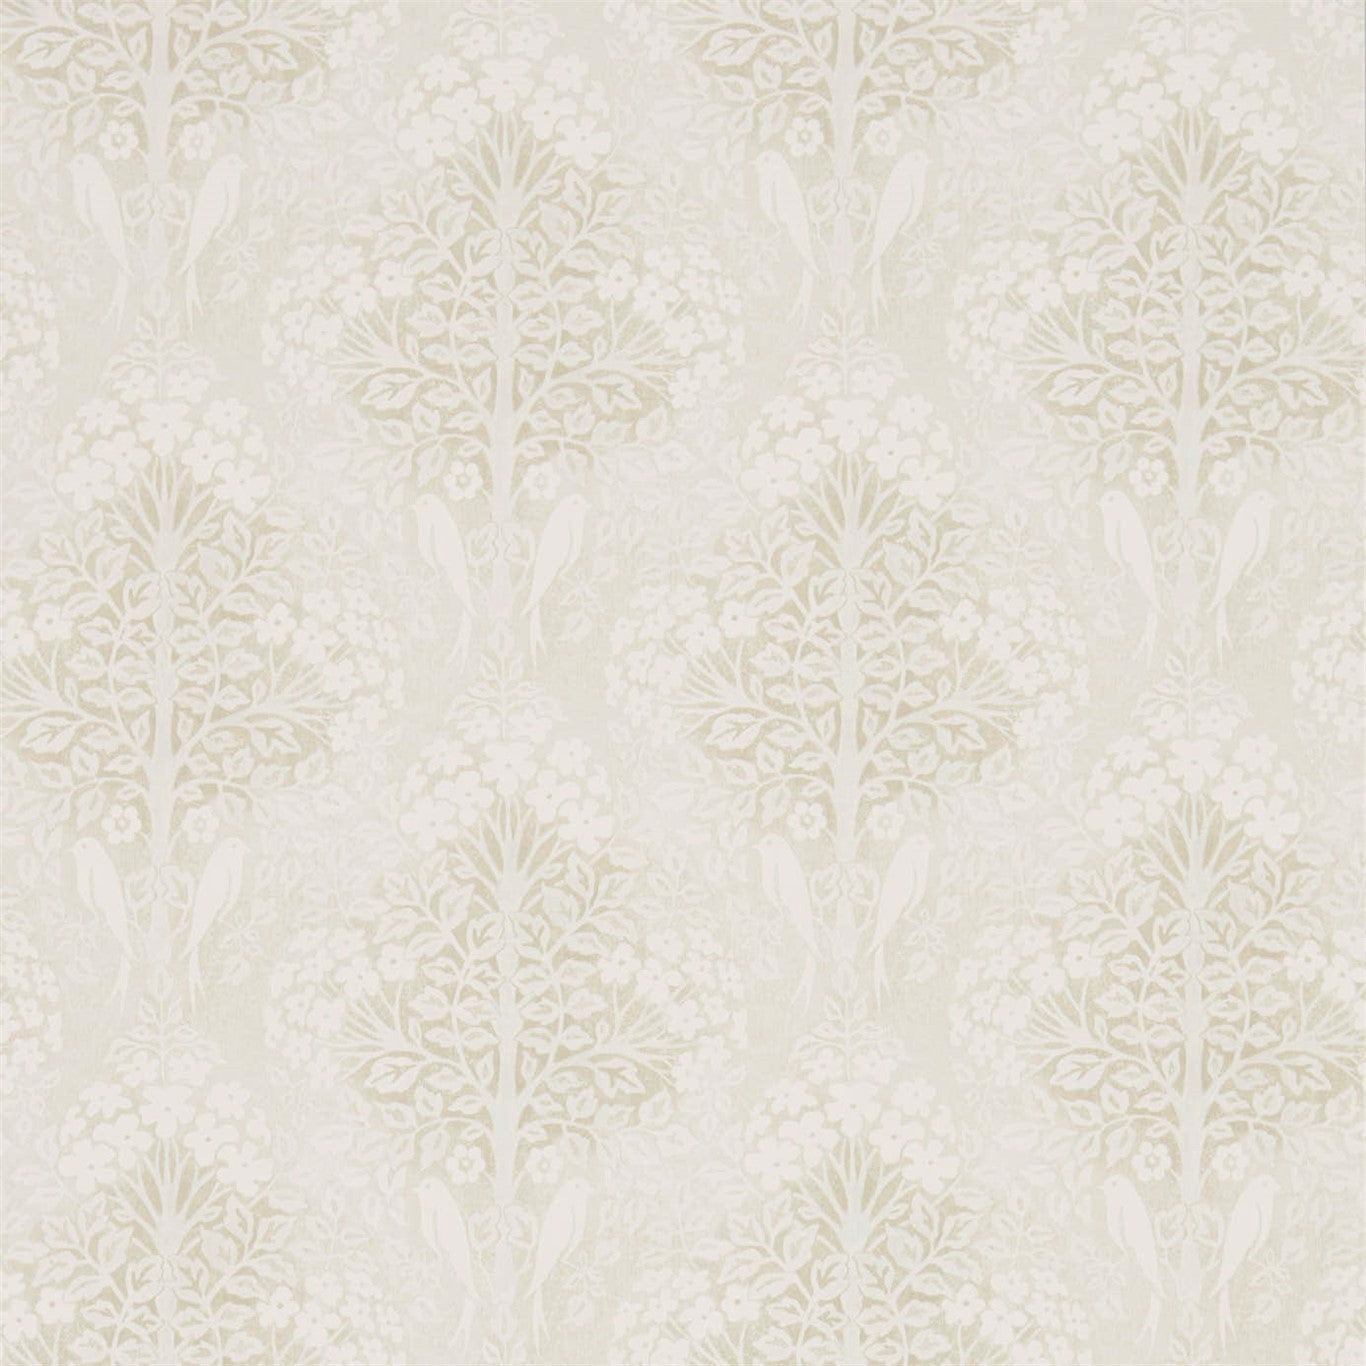 Lerena Ivory Wallpaper DDAM216397 by Sanderson